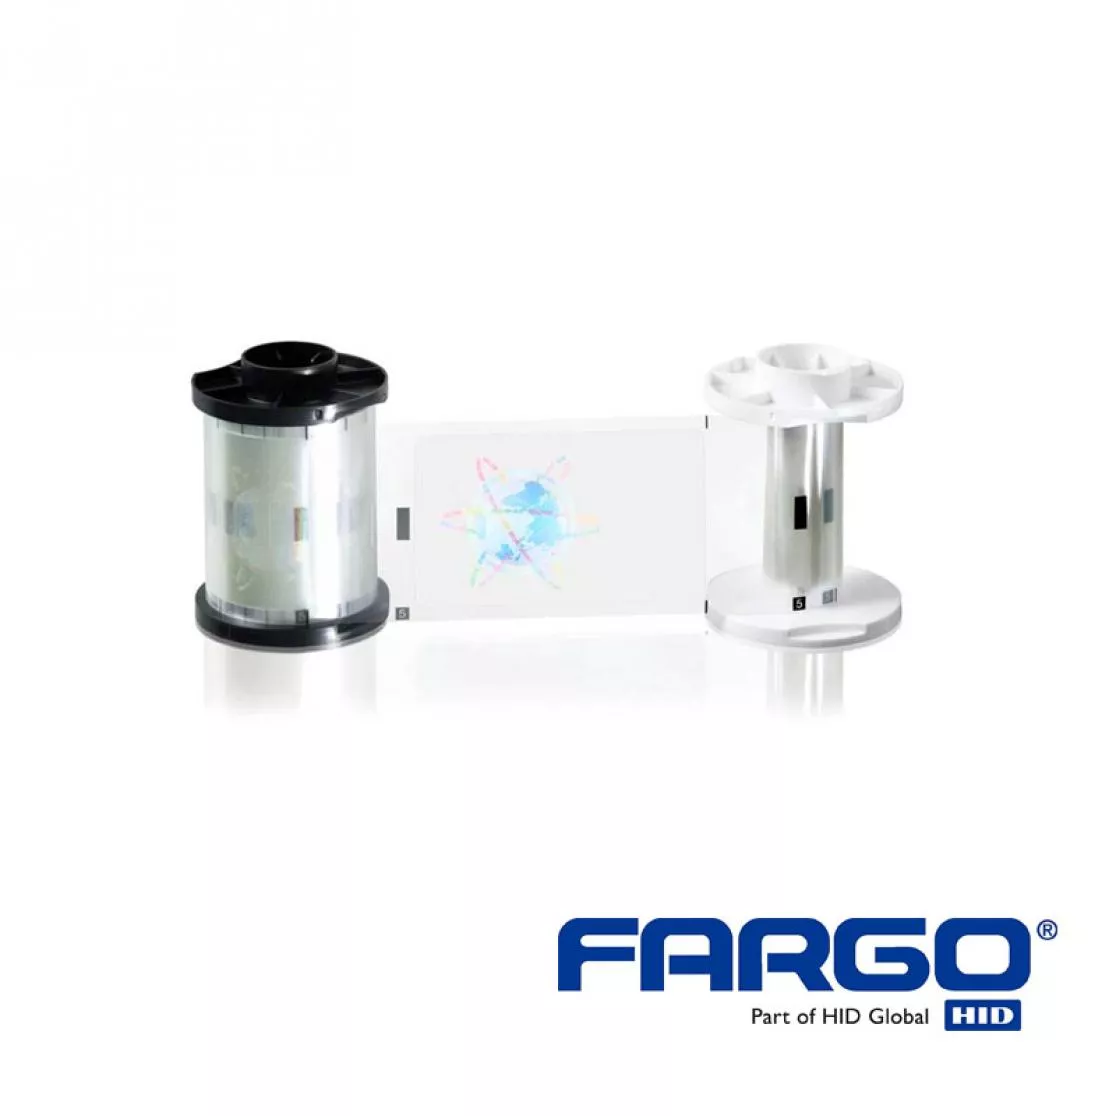 Re-Transferfilm Secure Orbit for card printer HID Fargo HDP6600